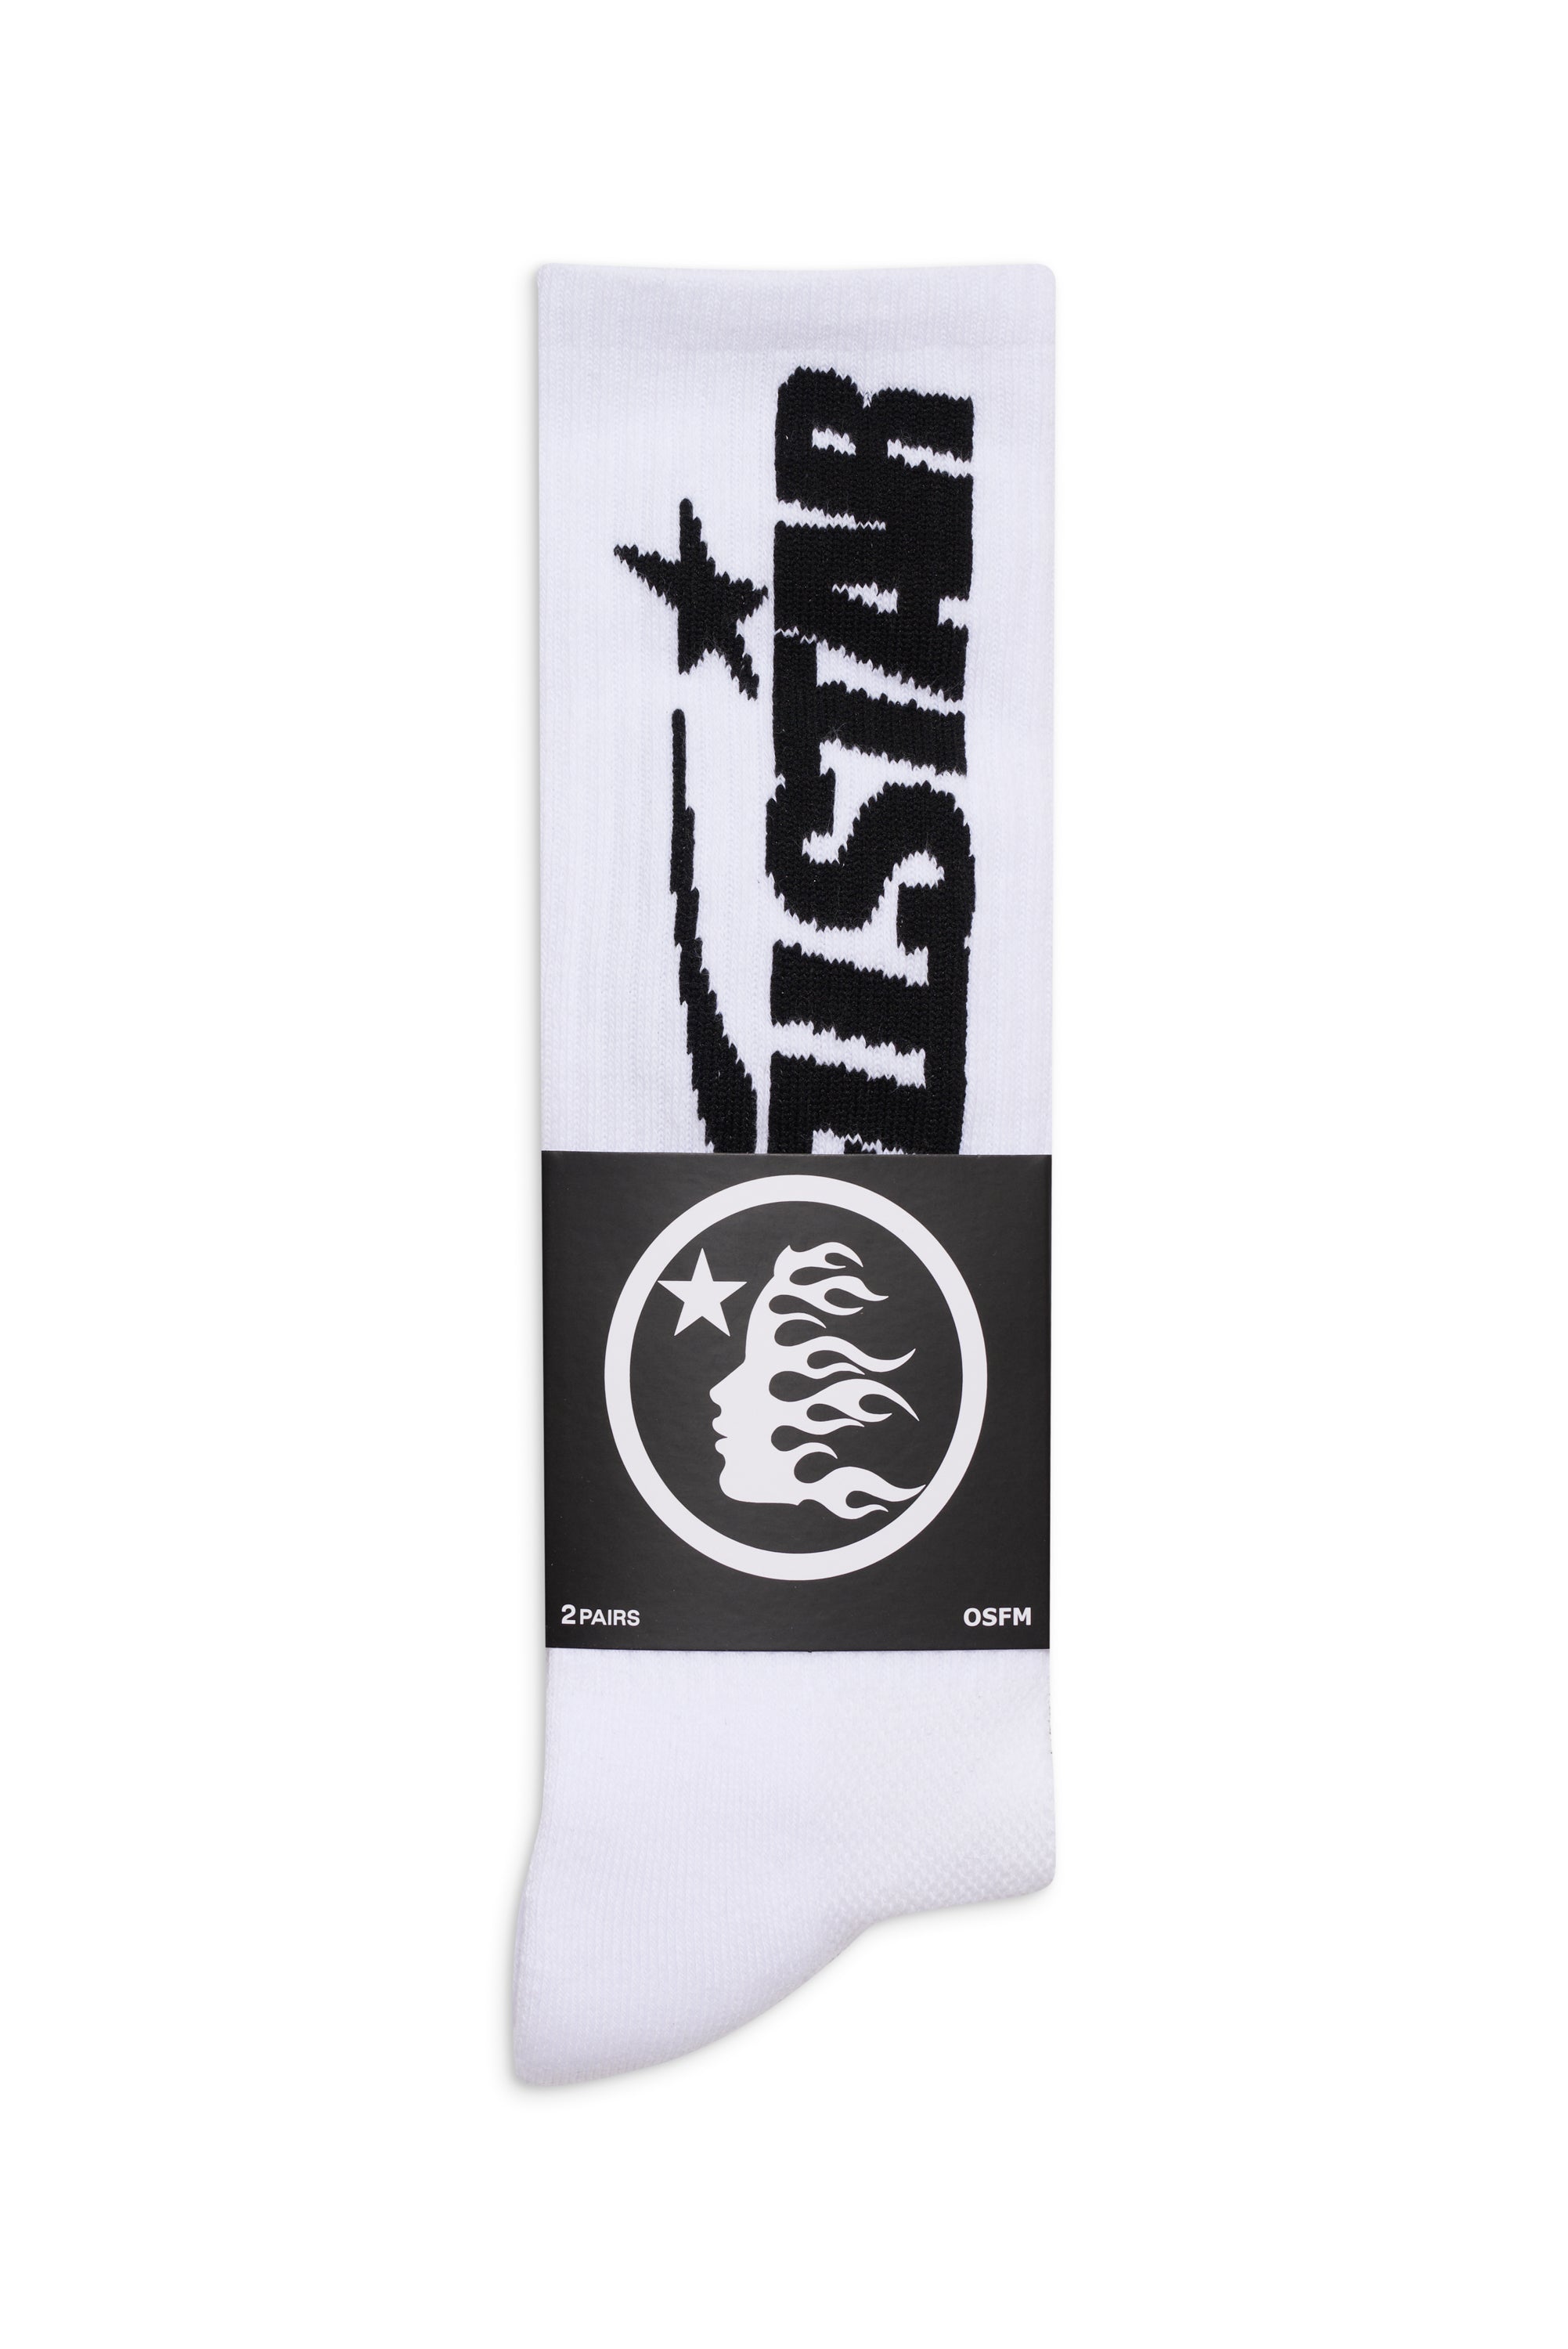 Hellstar Classic Socks 2-Pack